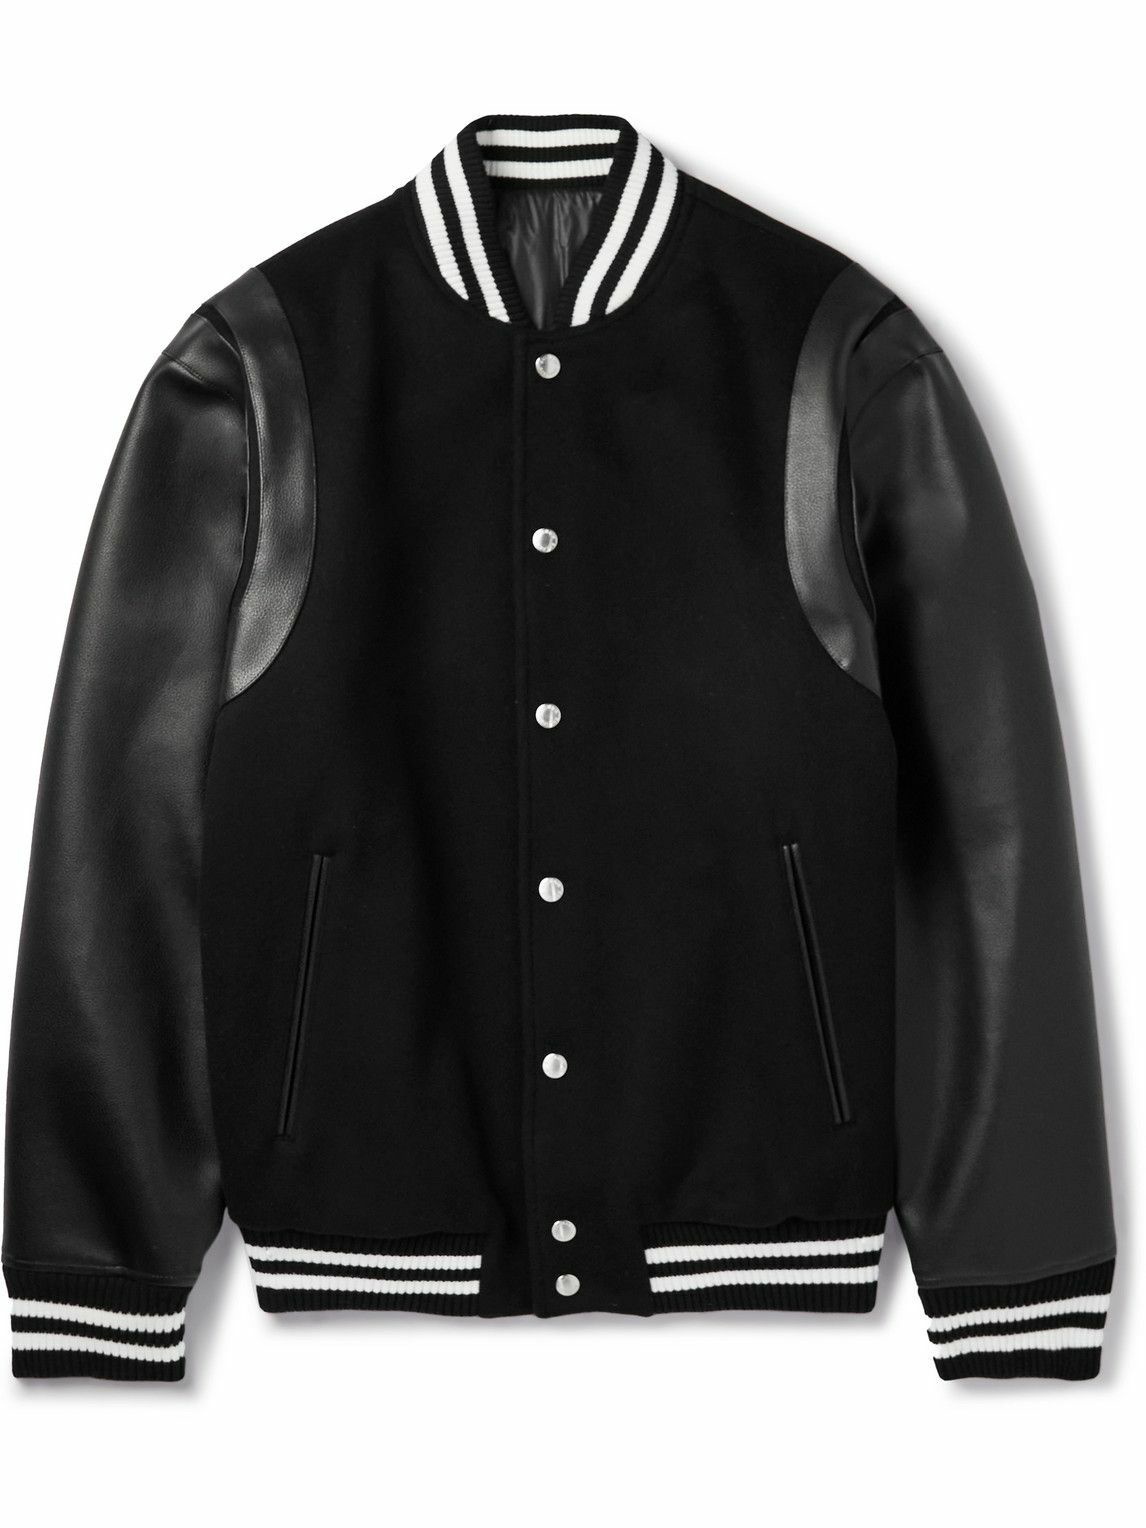 Balmain - Logo-Appliquéd Wool and Leather Varsity Jacket - Black Balmain